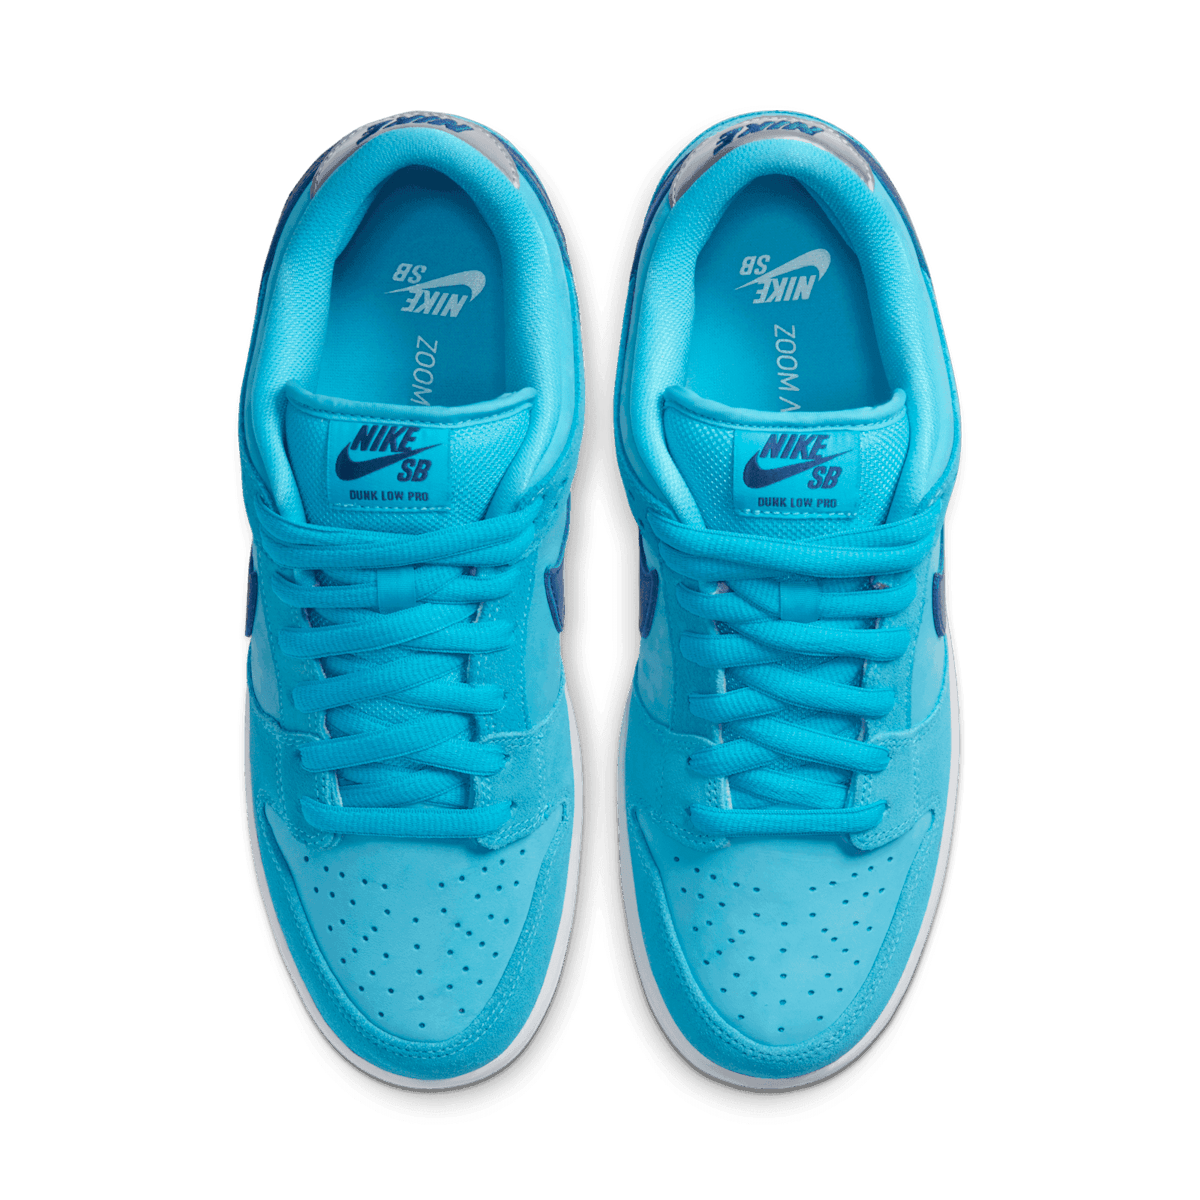 Nike SB Dunk Low Pro Blue Fury Angle 1